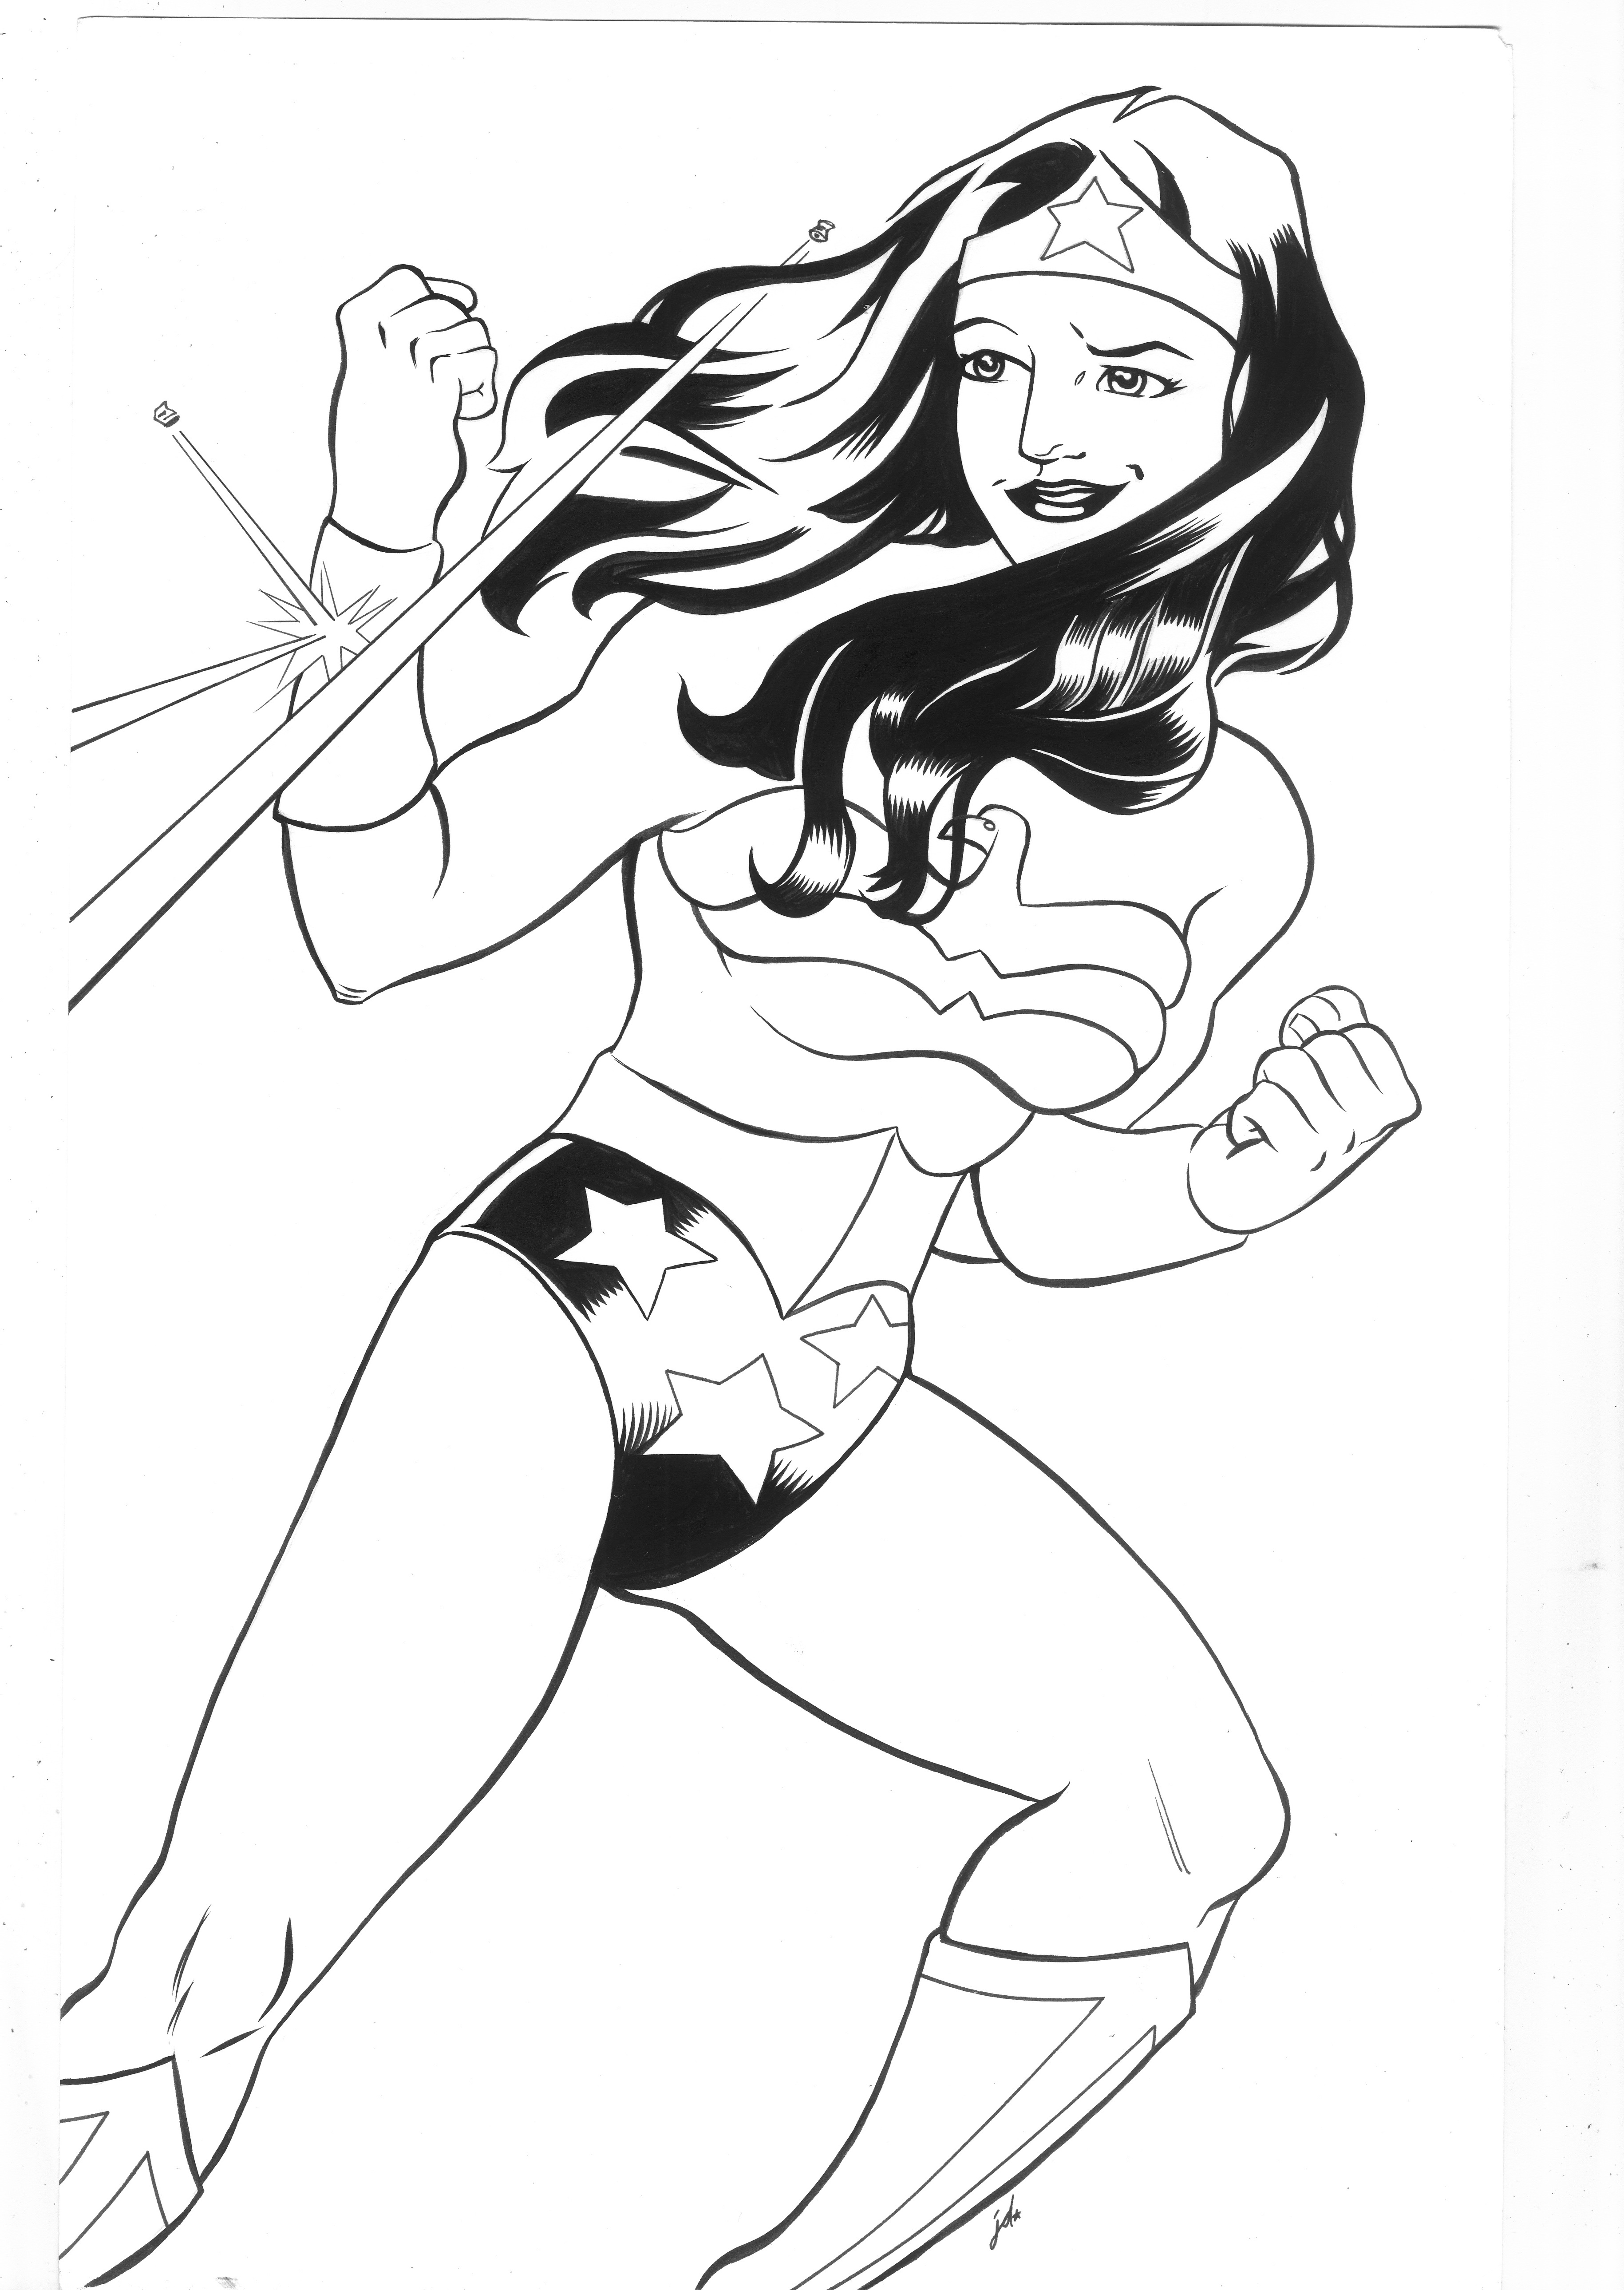 Wonder woman action clipart drawing black - ClipartFest